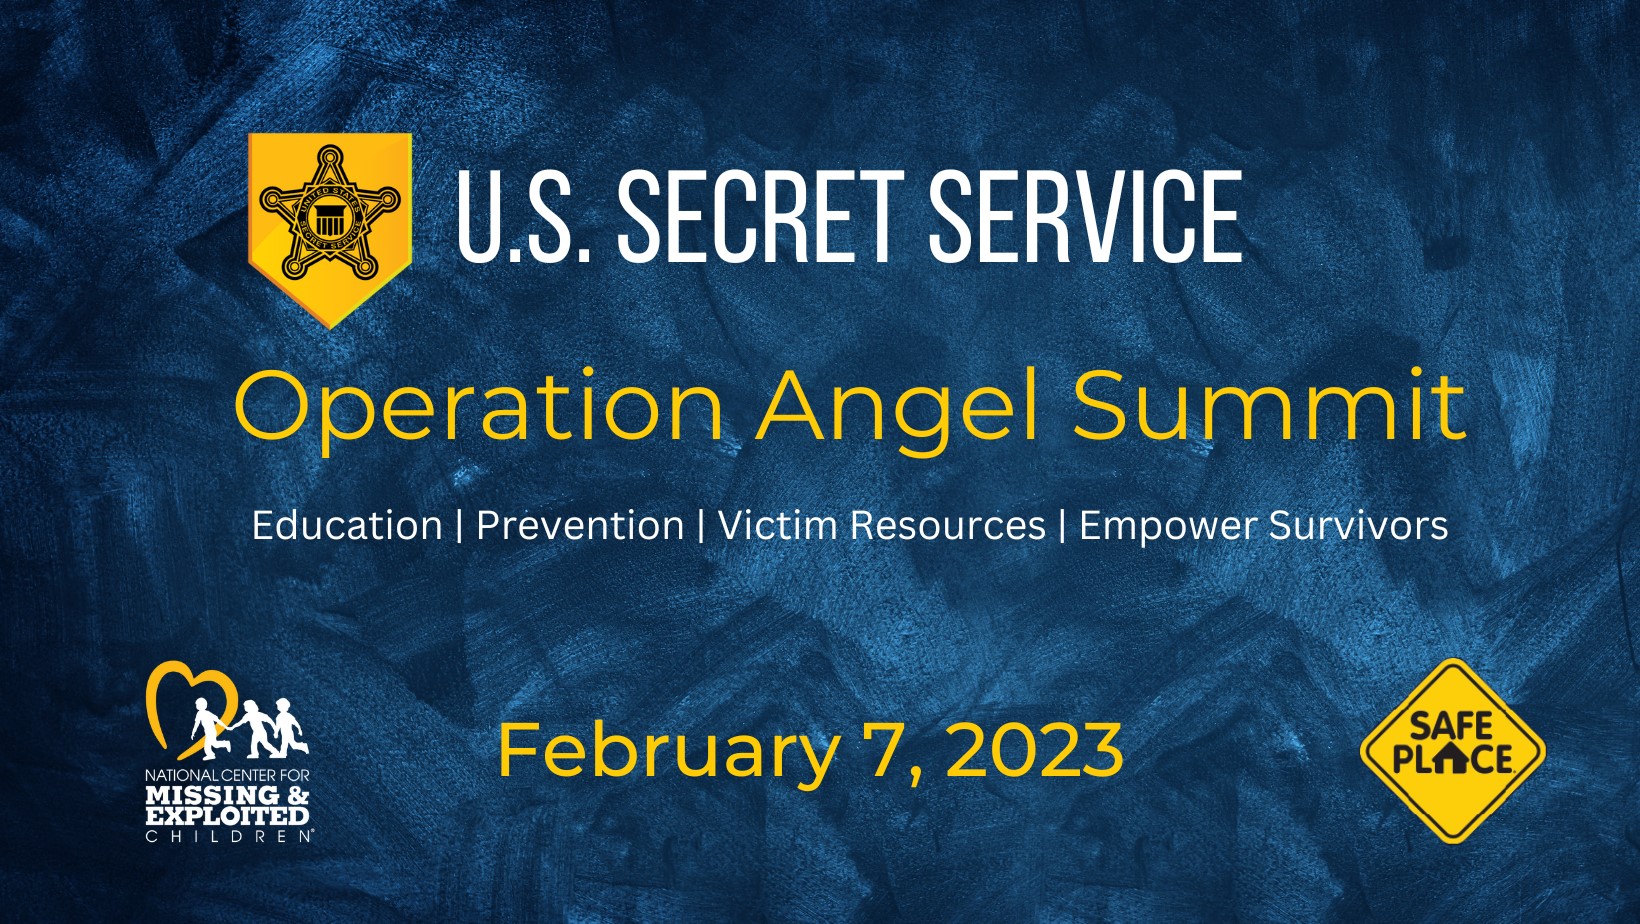 Operation Angel Summit on February 7, 2023 in Louisville, Kentucky.